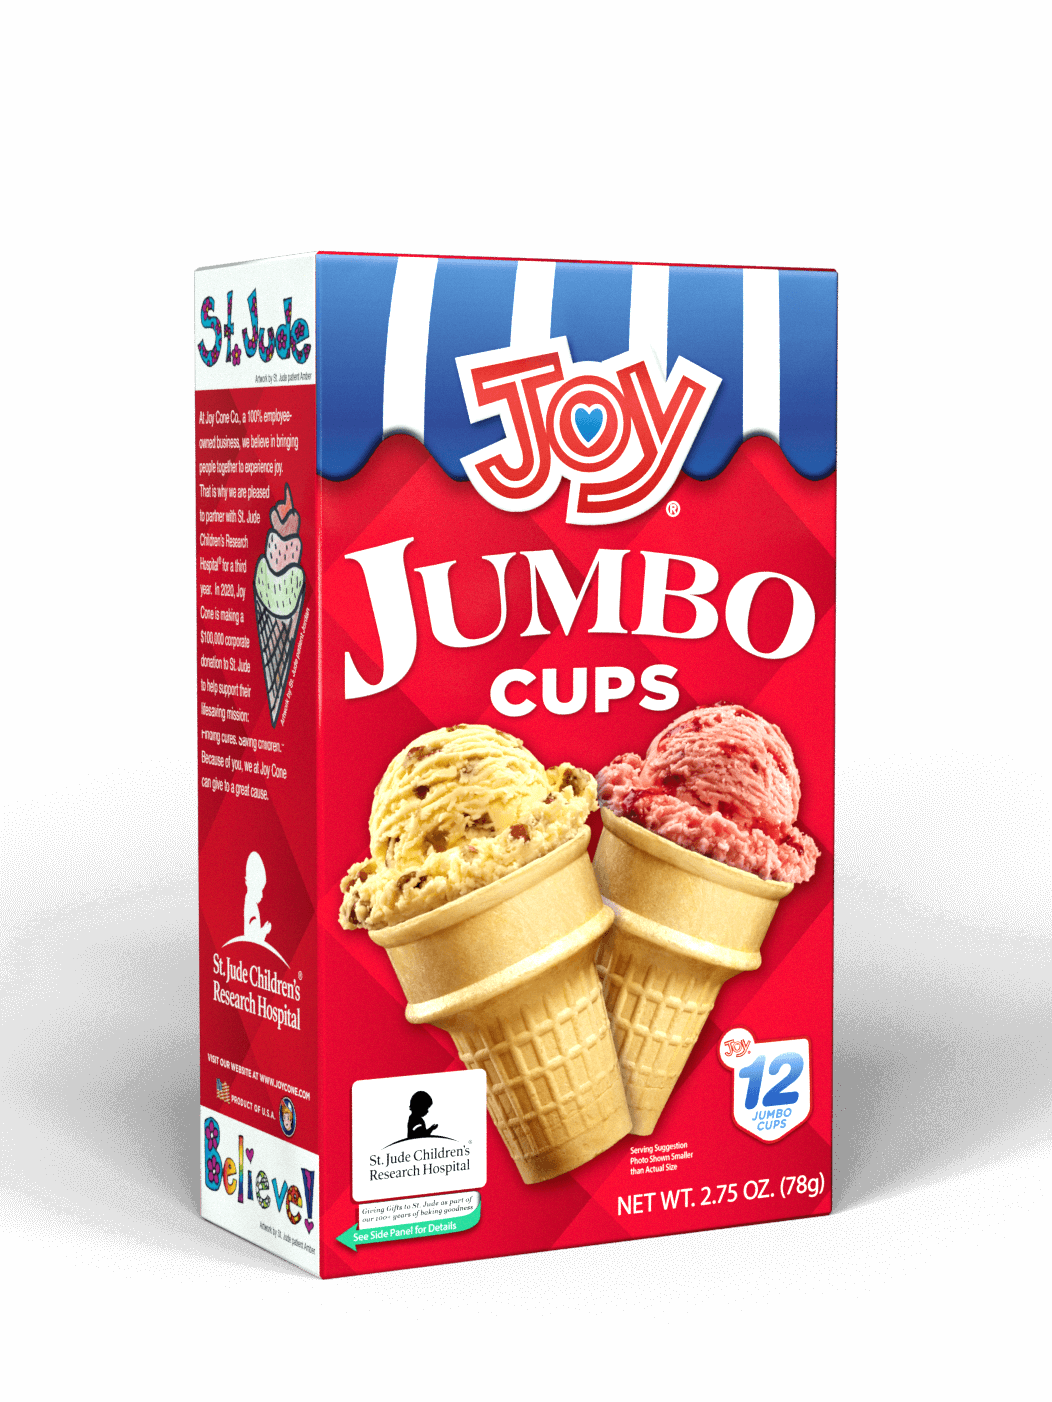 12ct. Jumbo Cups box